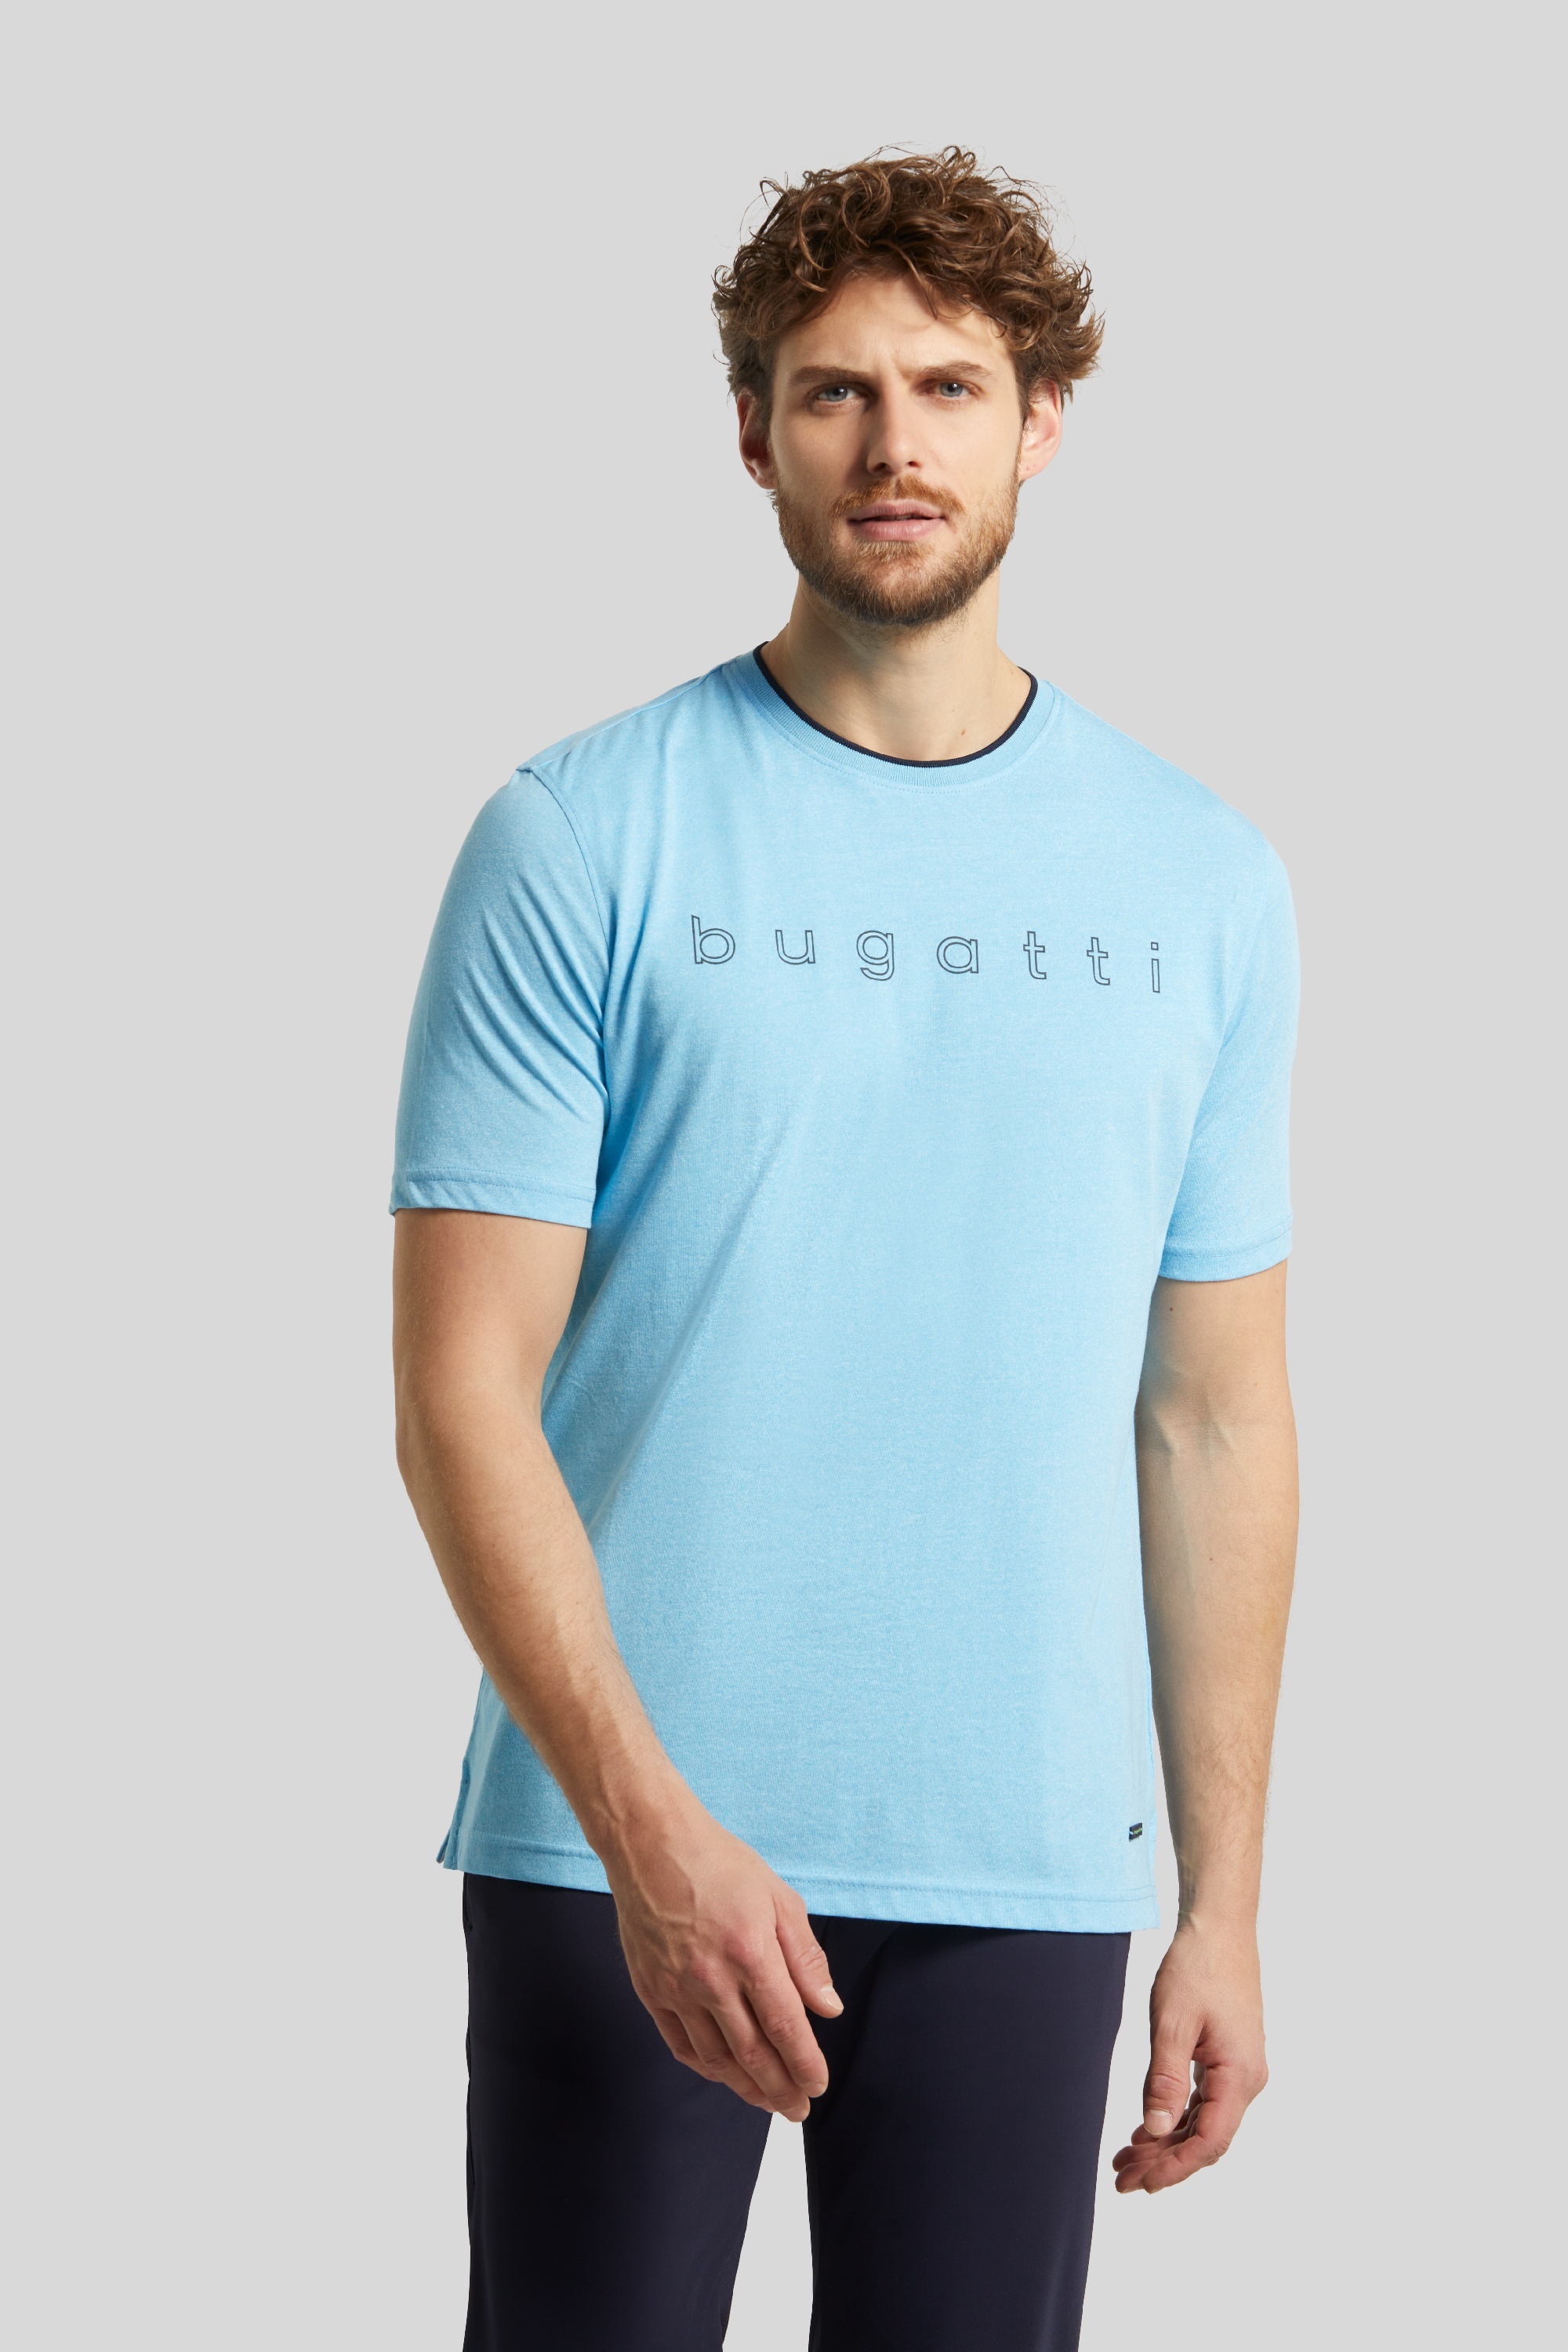 mit bugatti in bugatti Logo-Print | blau großem T-Shirt